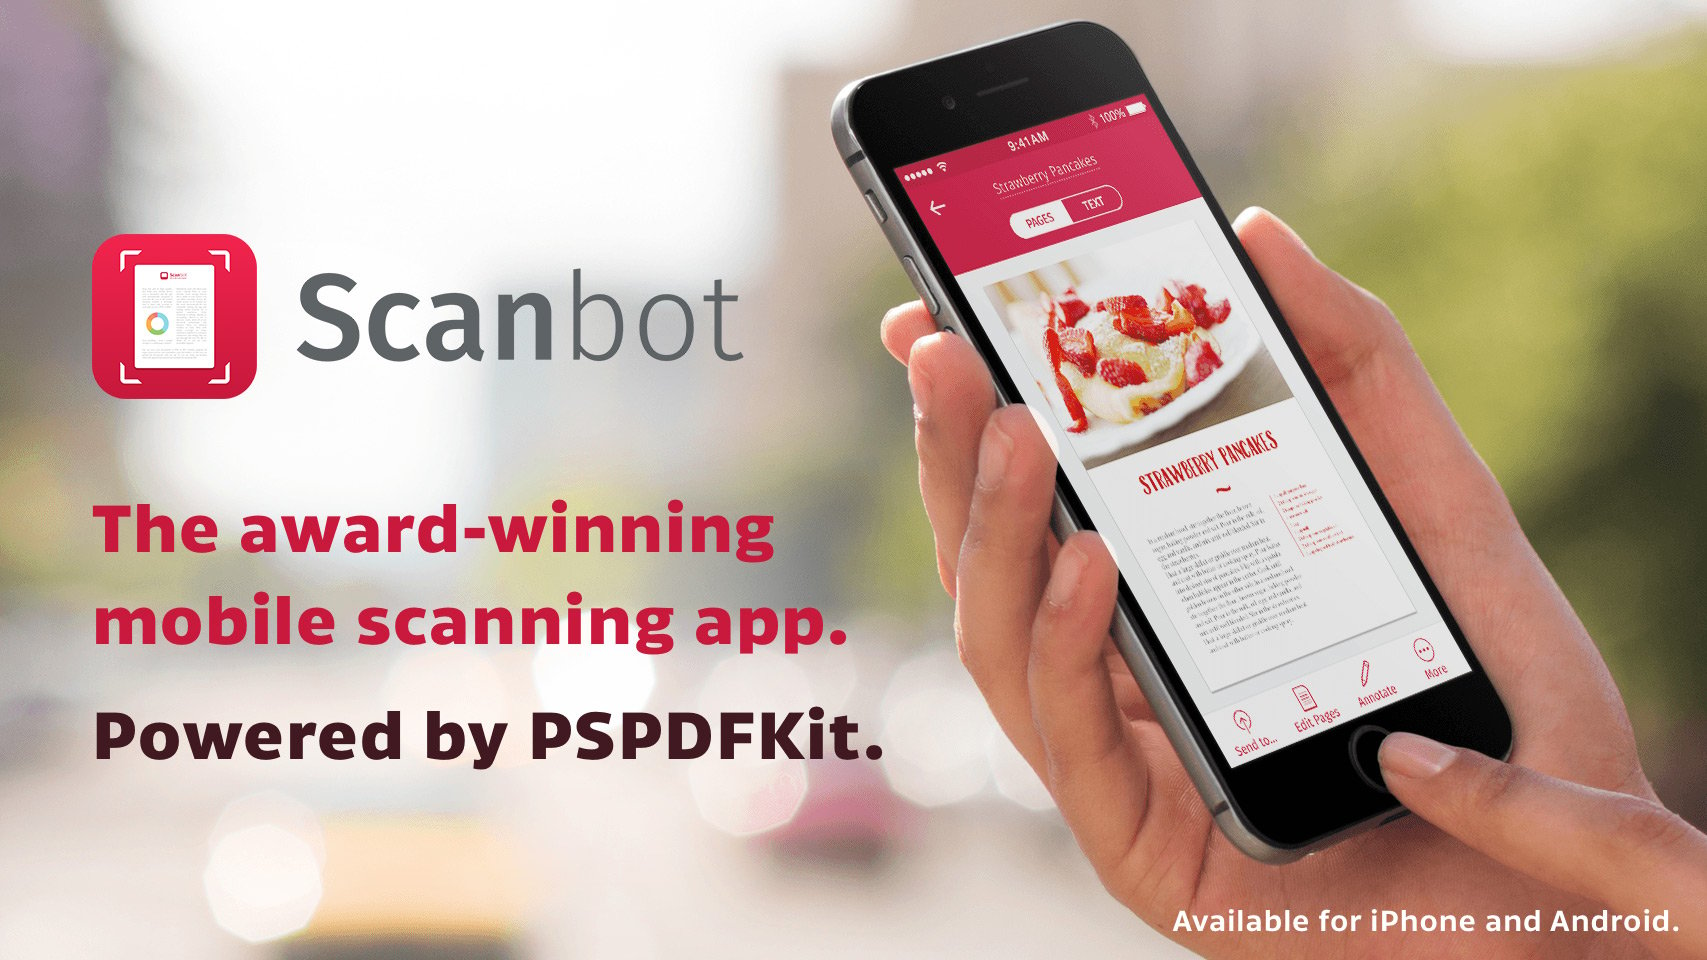 Scanbot, an award-winning scanning app powered by PSPDFKit.